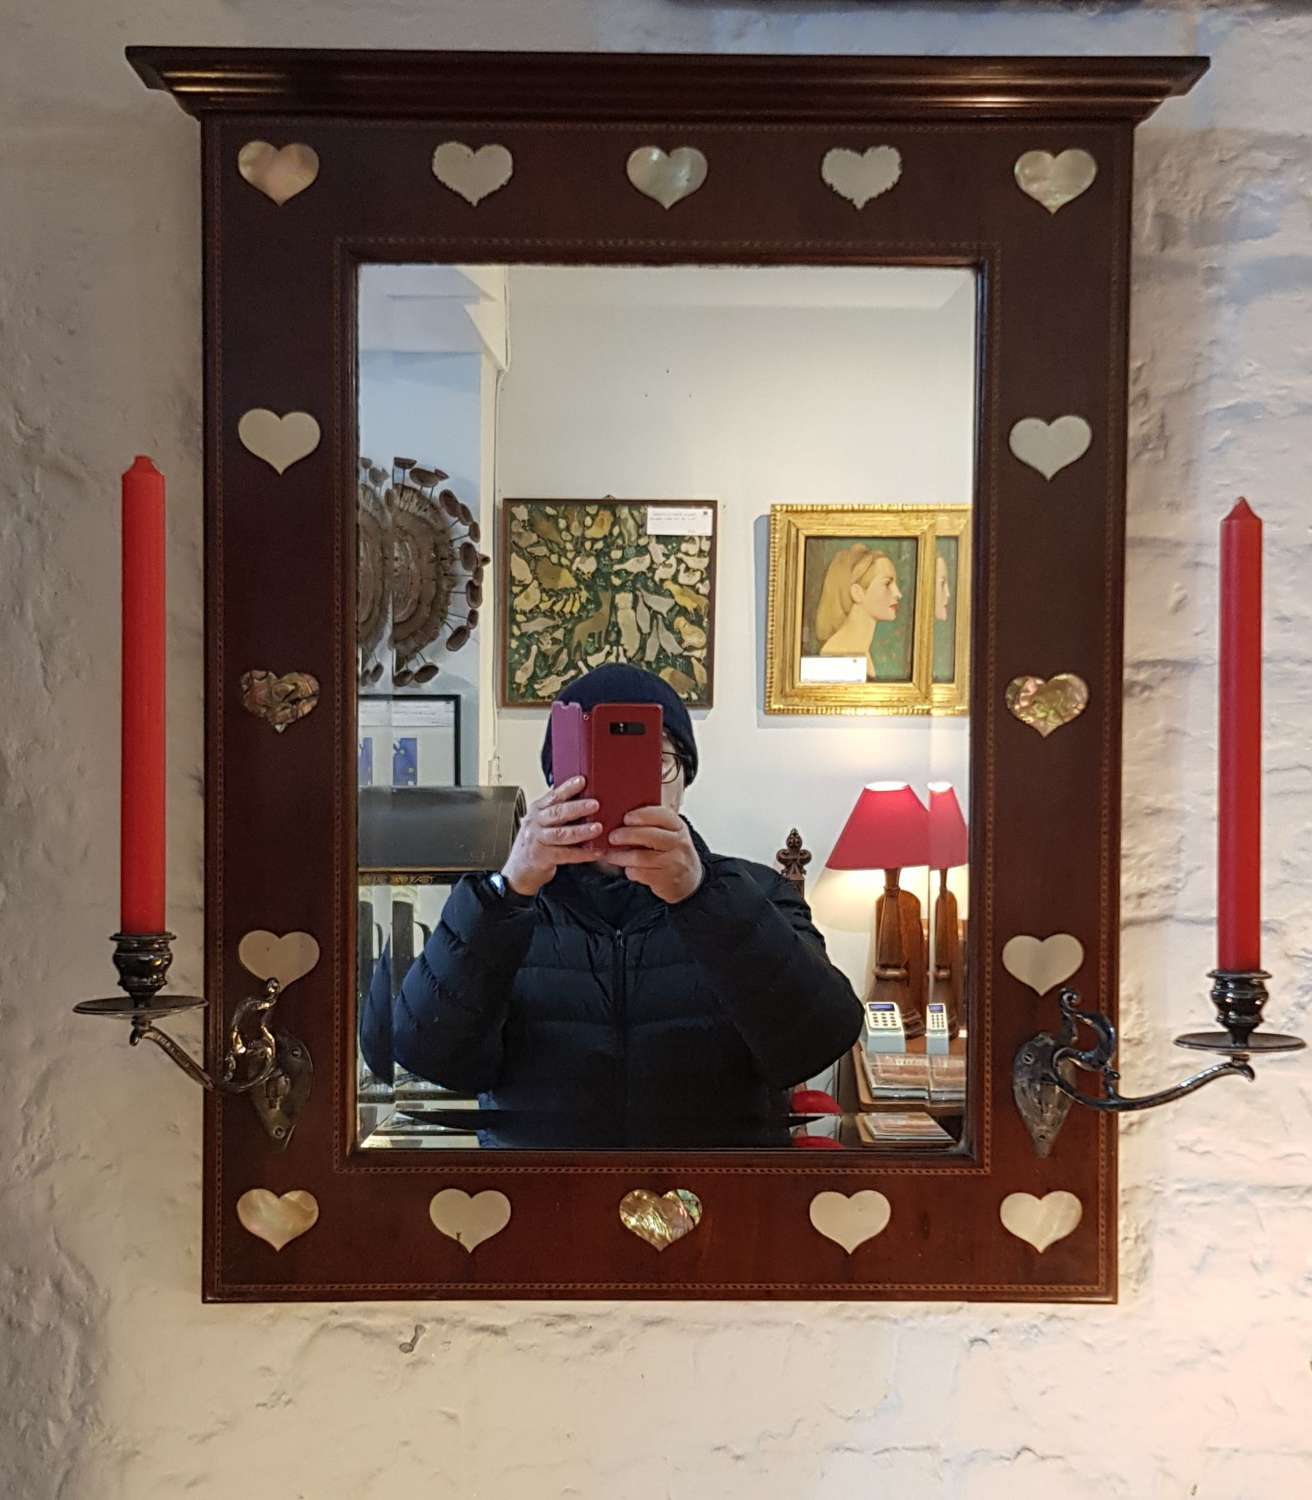 Shapland & Petter Arts & Crafts Art Nouveau inlaid hearts mirror